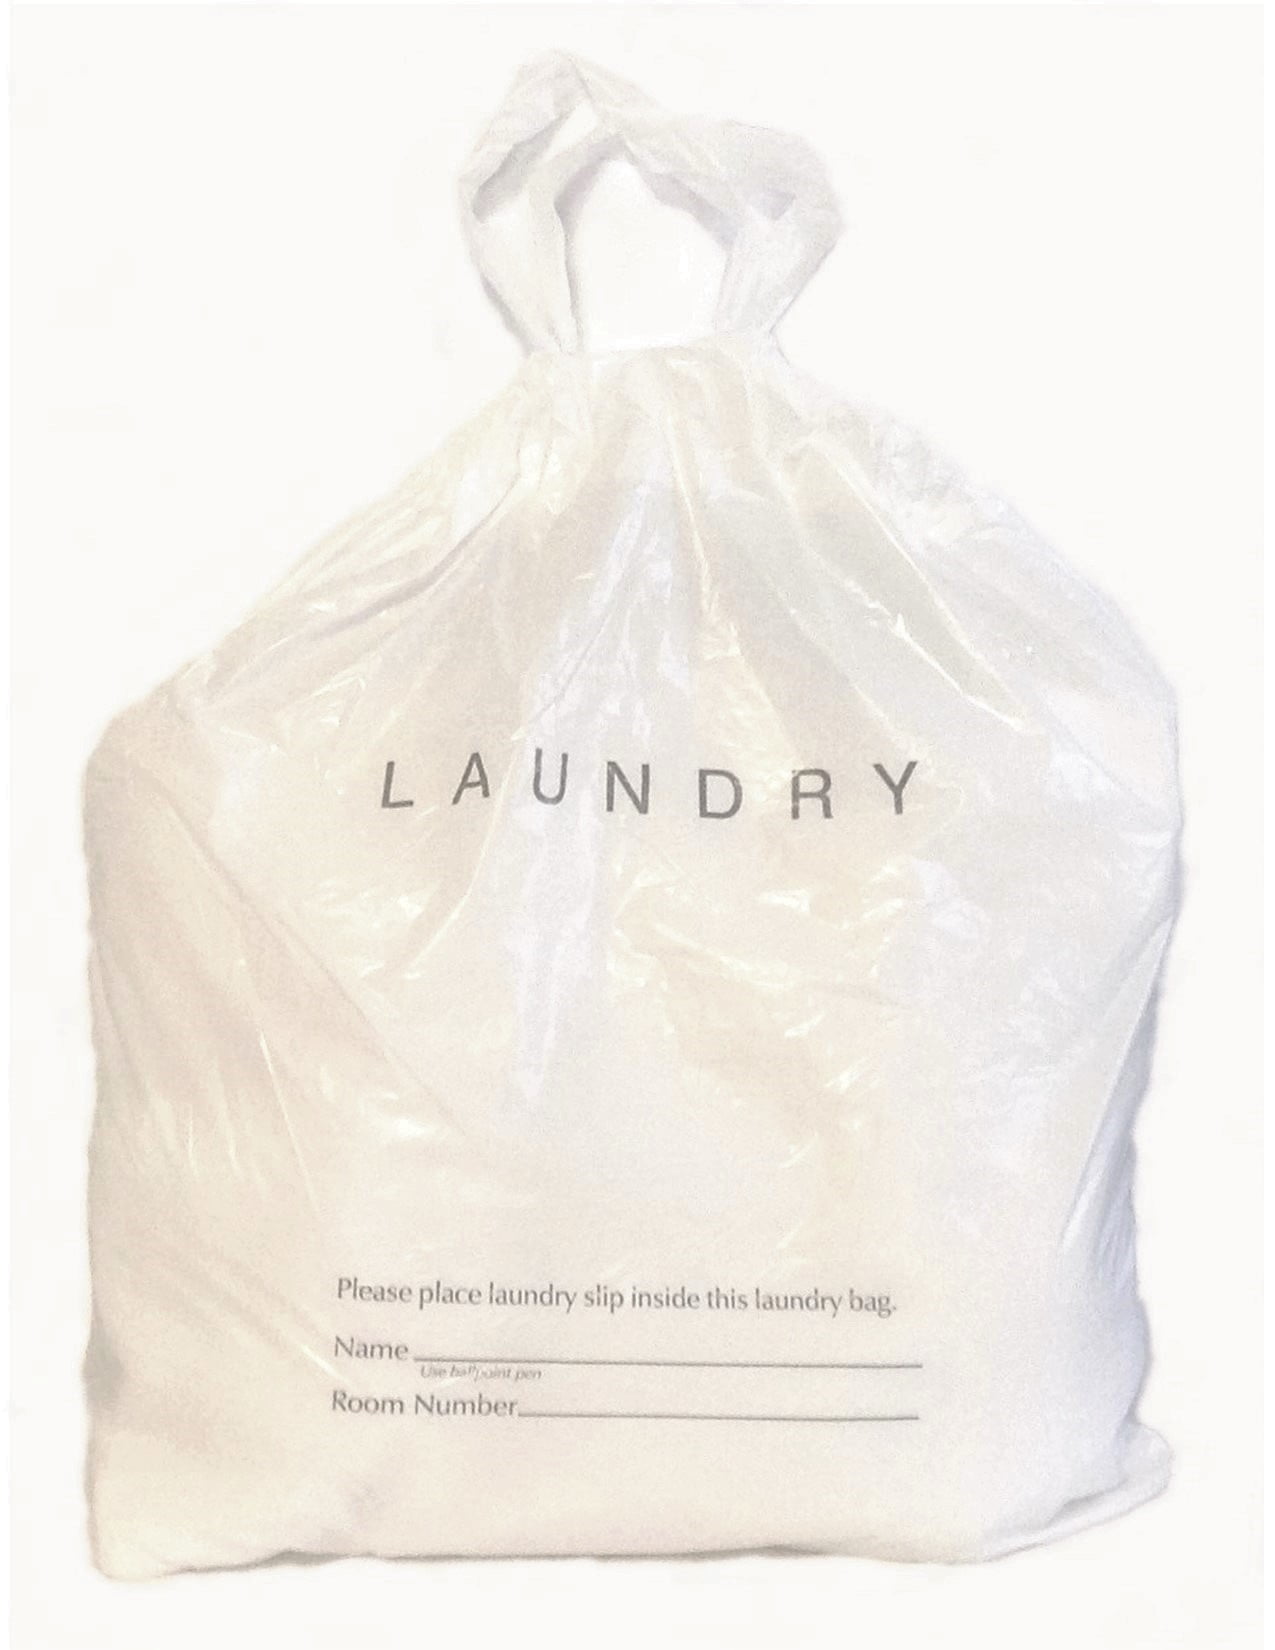 Interplas 18 x 19 Plastic Laundry Bags Biodegradable